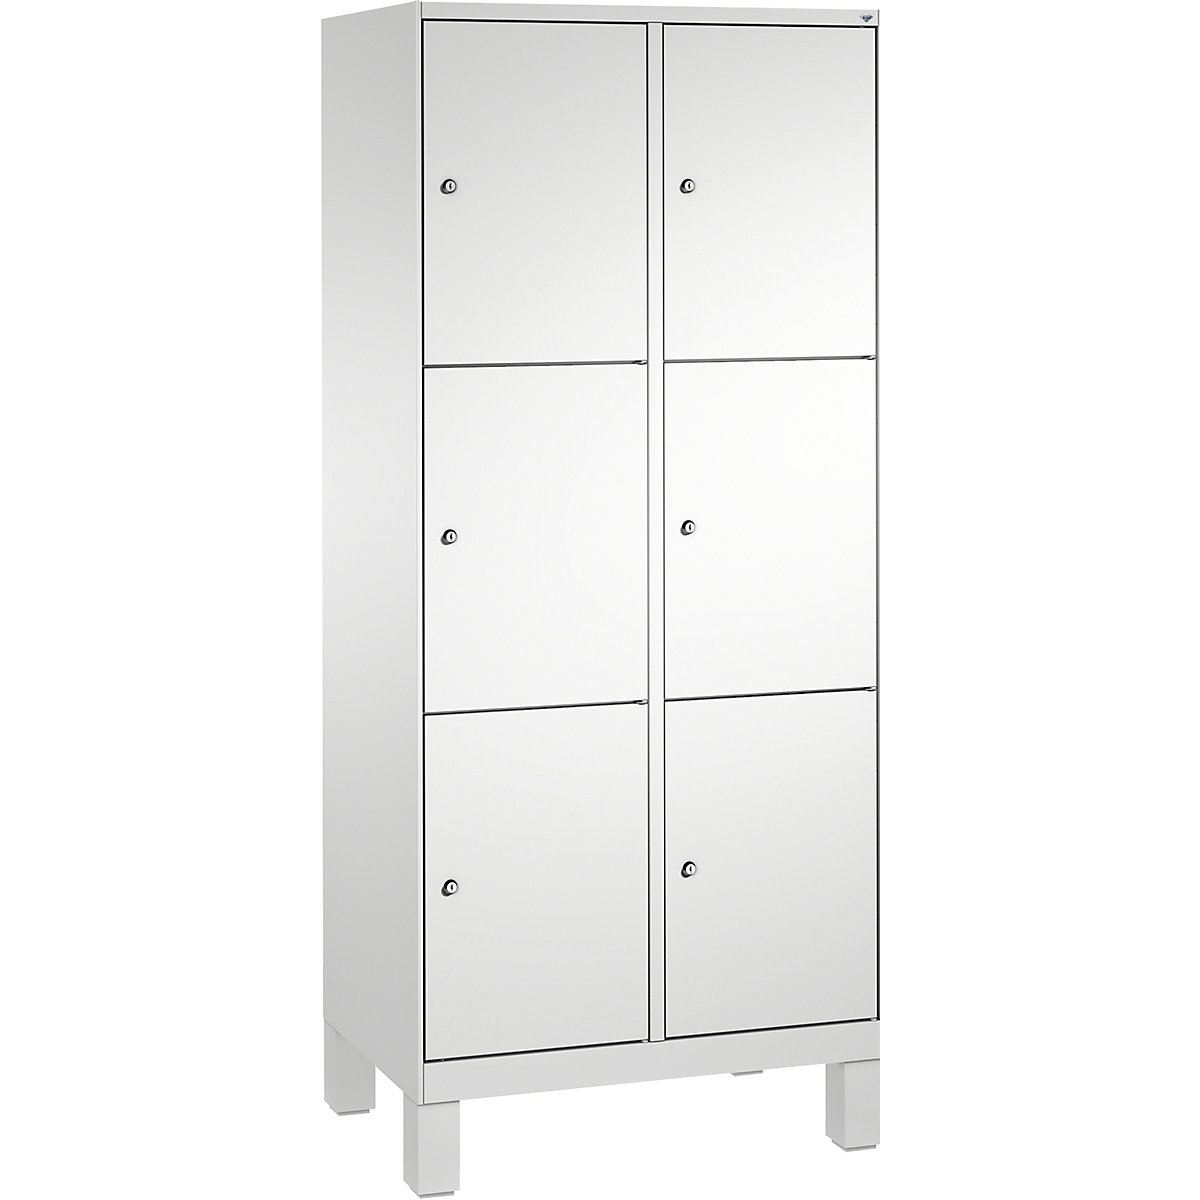 EVOLO locker unit, with feet – C+P, 2 compartments, 3 shelf compartments each, compartment width 400 mm, light grey